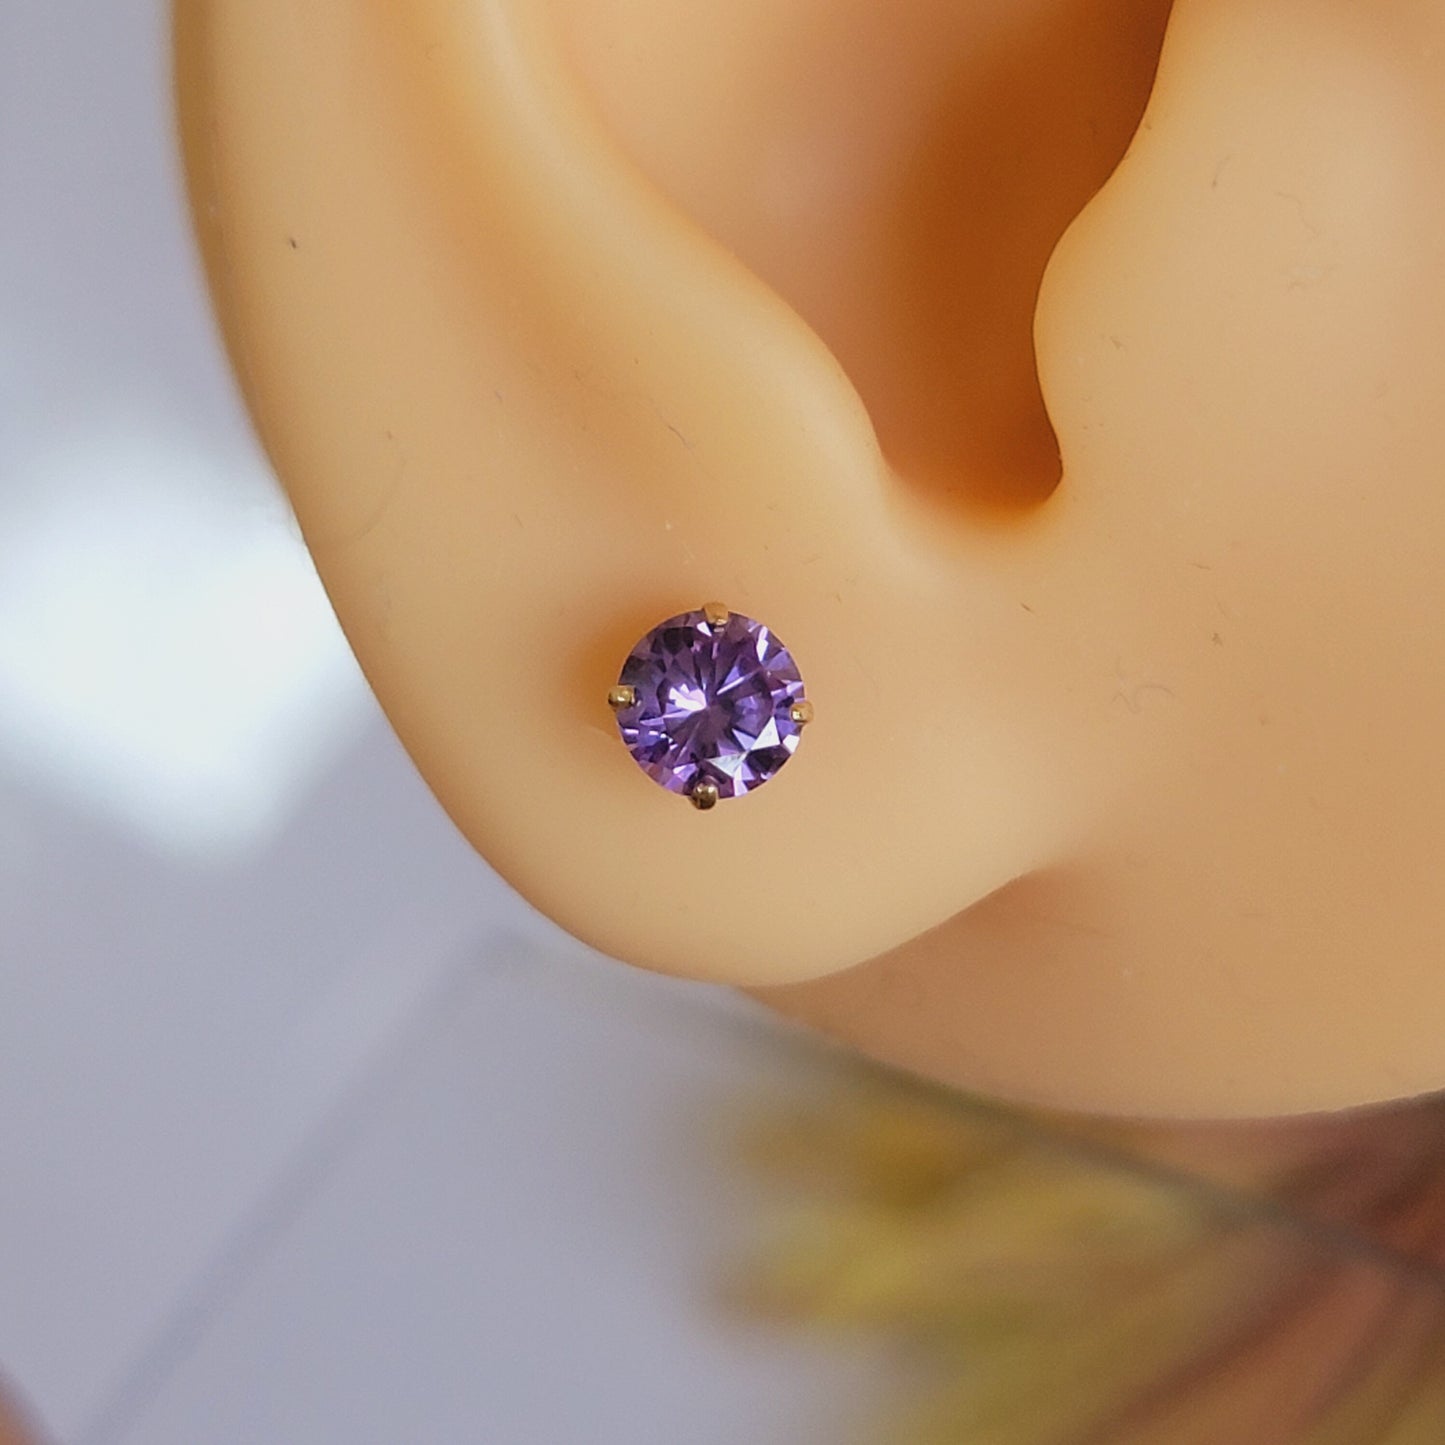 Amethyst Earrings in 14k Gold, Amethyst Stud Earrings, Birthstones Earrings, Purple Birthstone Earrings, February Birthday Gifts